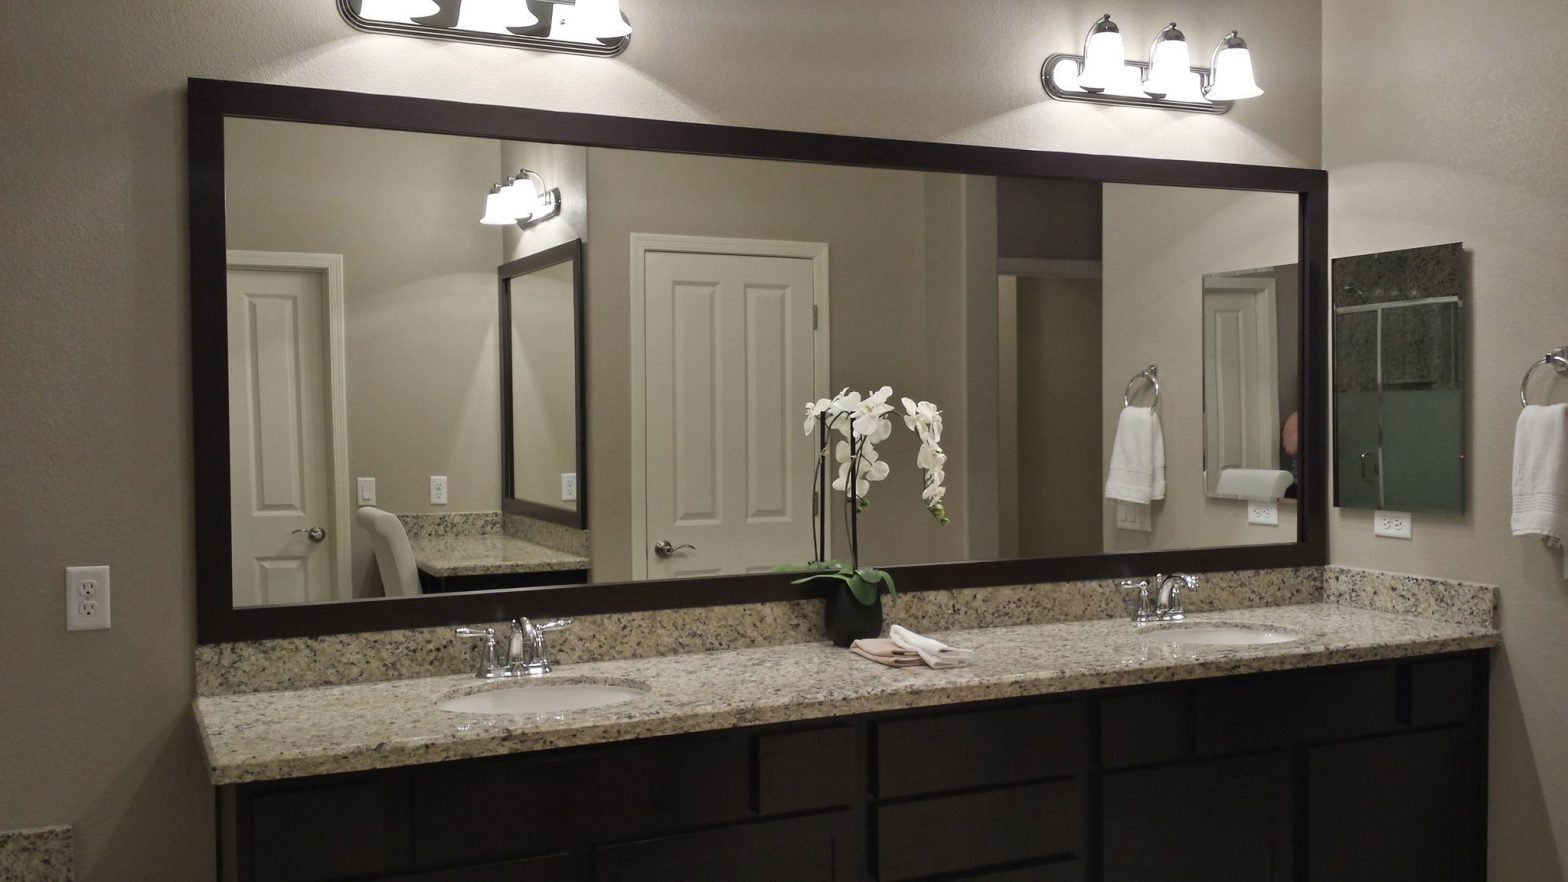 ULINE Bathroom Mirror User Guide